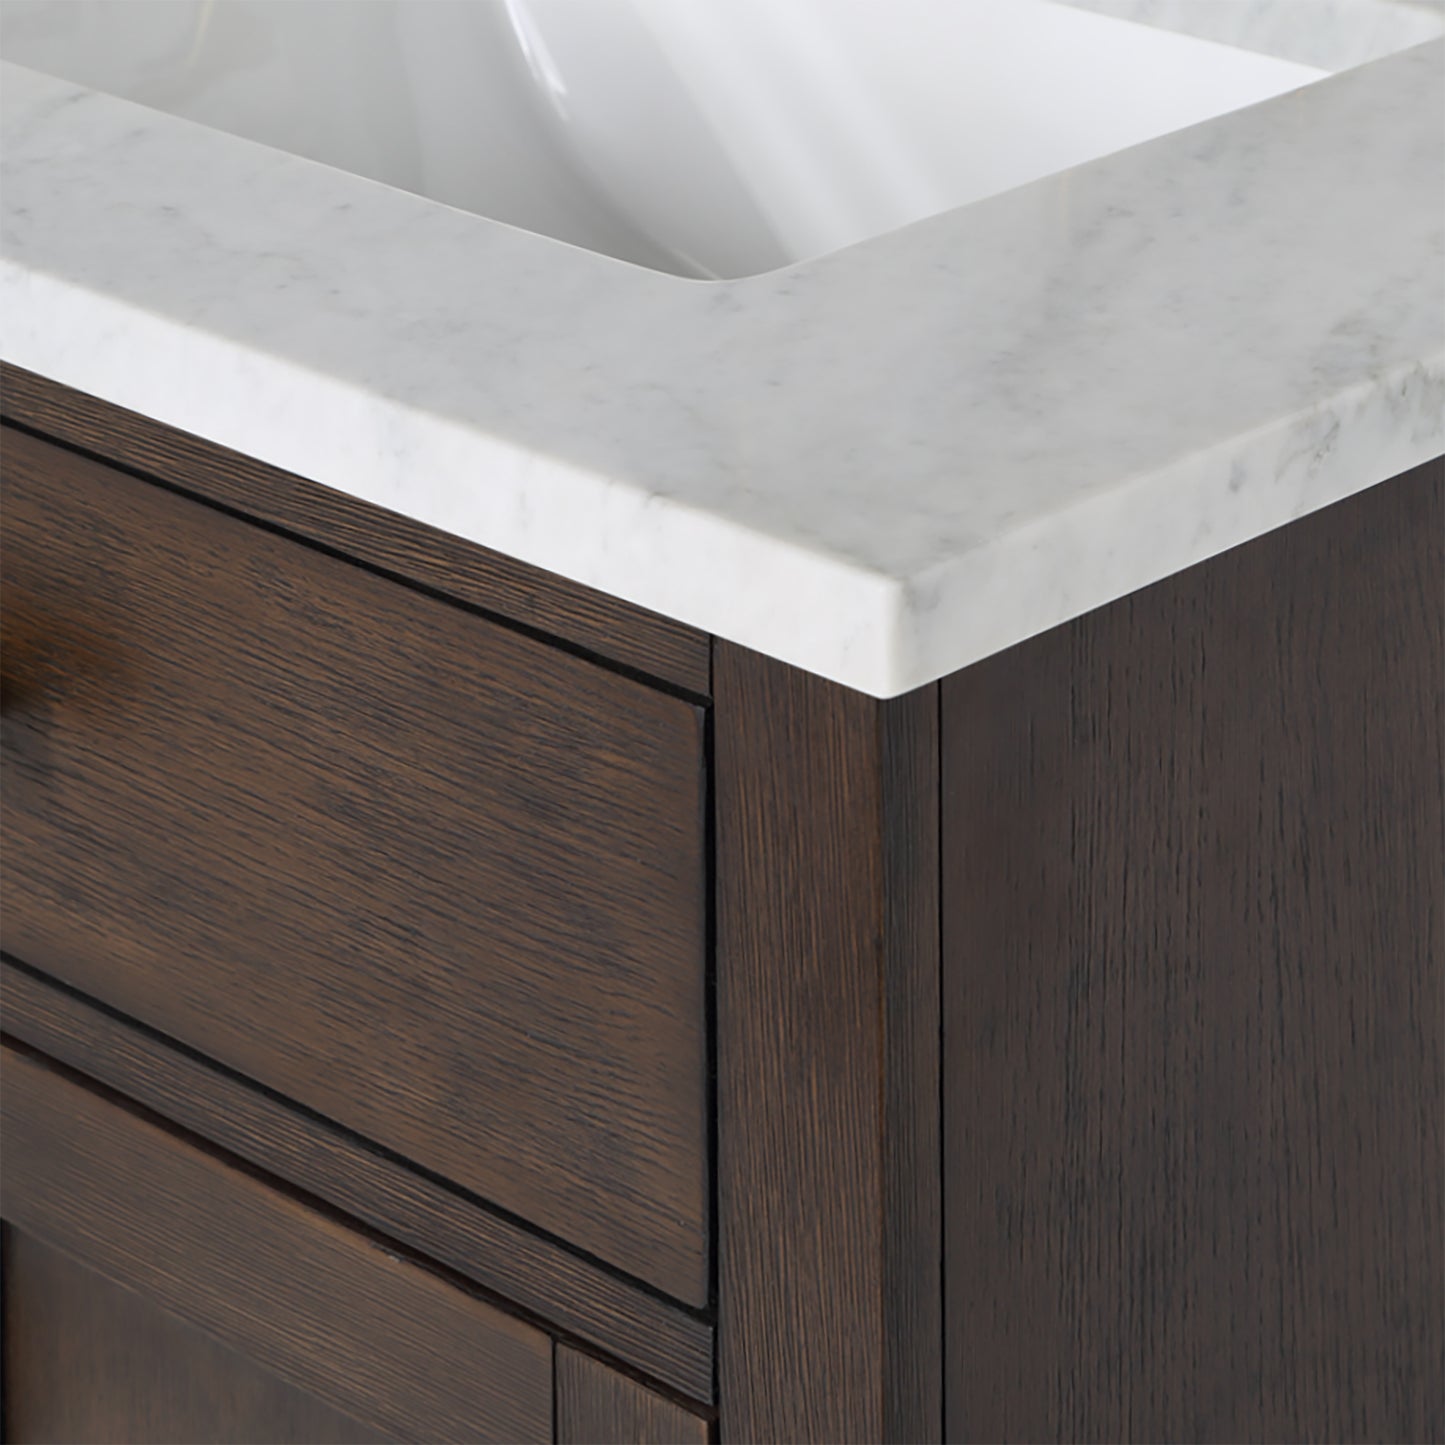 Water Creation Chestnut 30" Single Sink Carrara White Marble Countertop Vanity - Luxe Bathroom Vanities